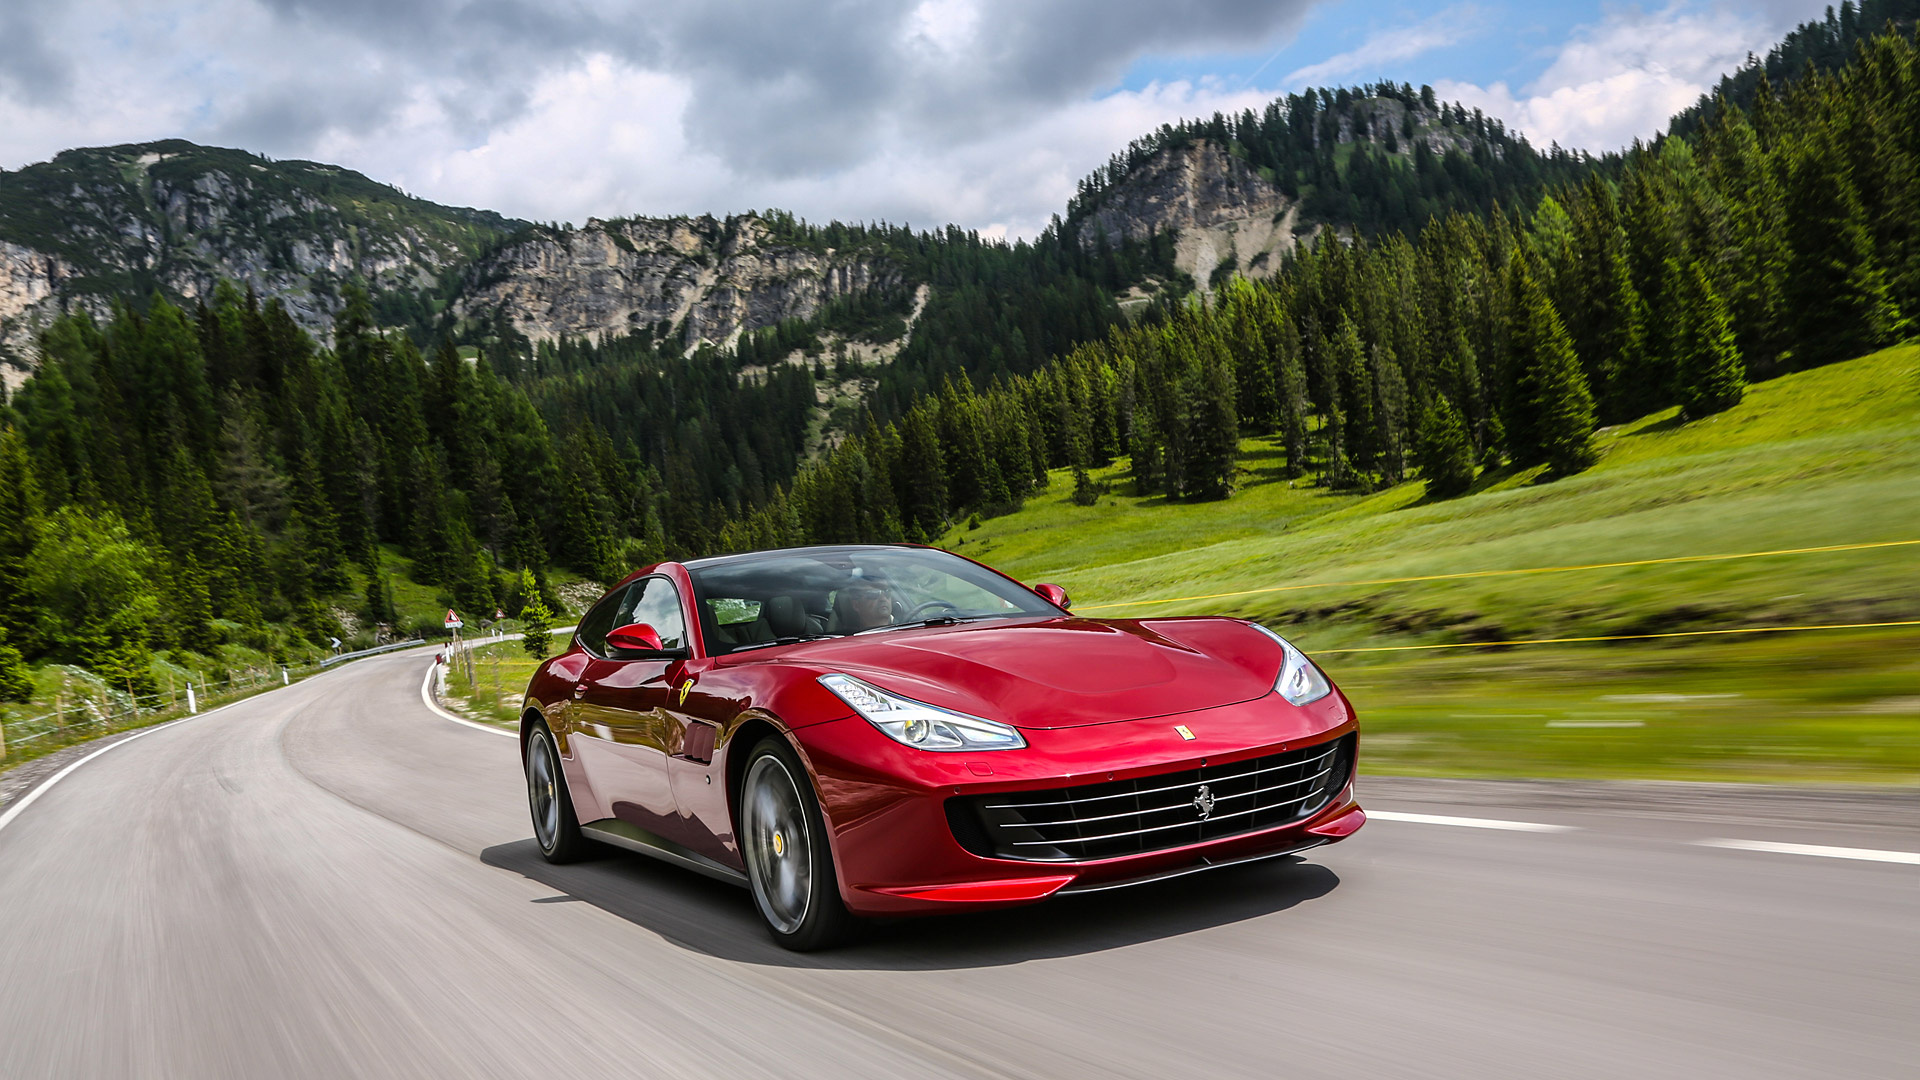 Ferrari GTC4 Lusso car, HD wallpapers, 2017 model, Supercar images, 1920x1080 Full HD Desktop